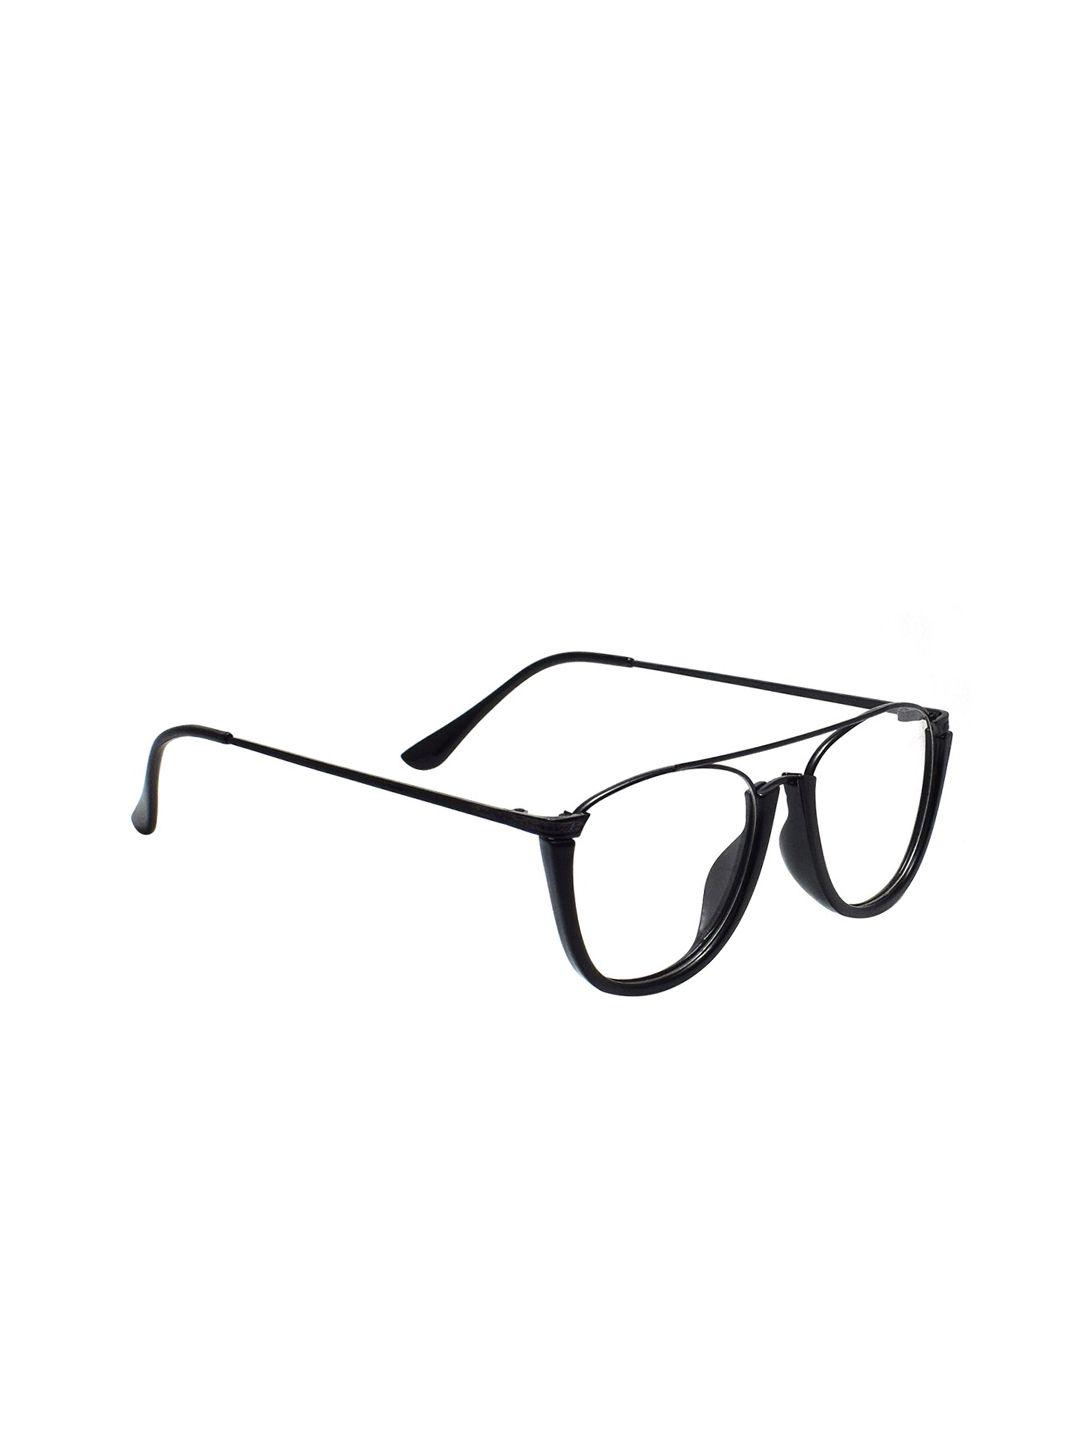 peter jones eyewear unisex black & transparent anti glare glasses full rim square frames